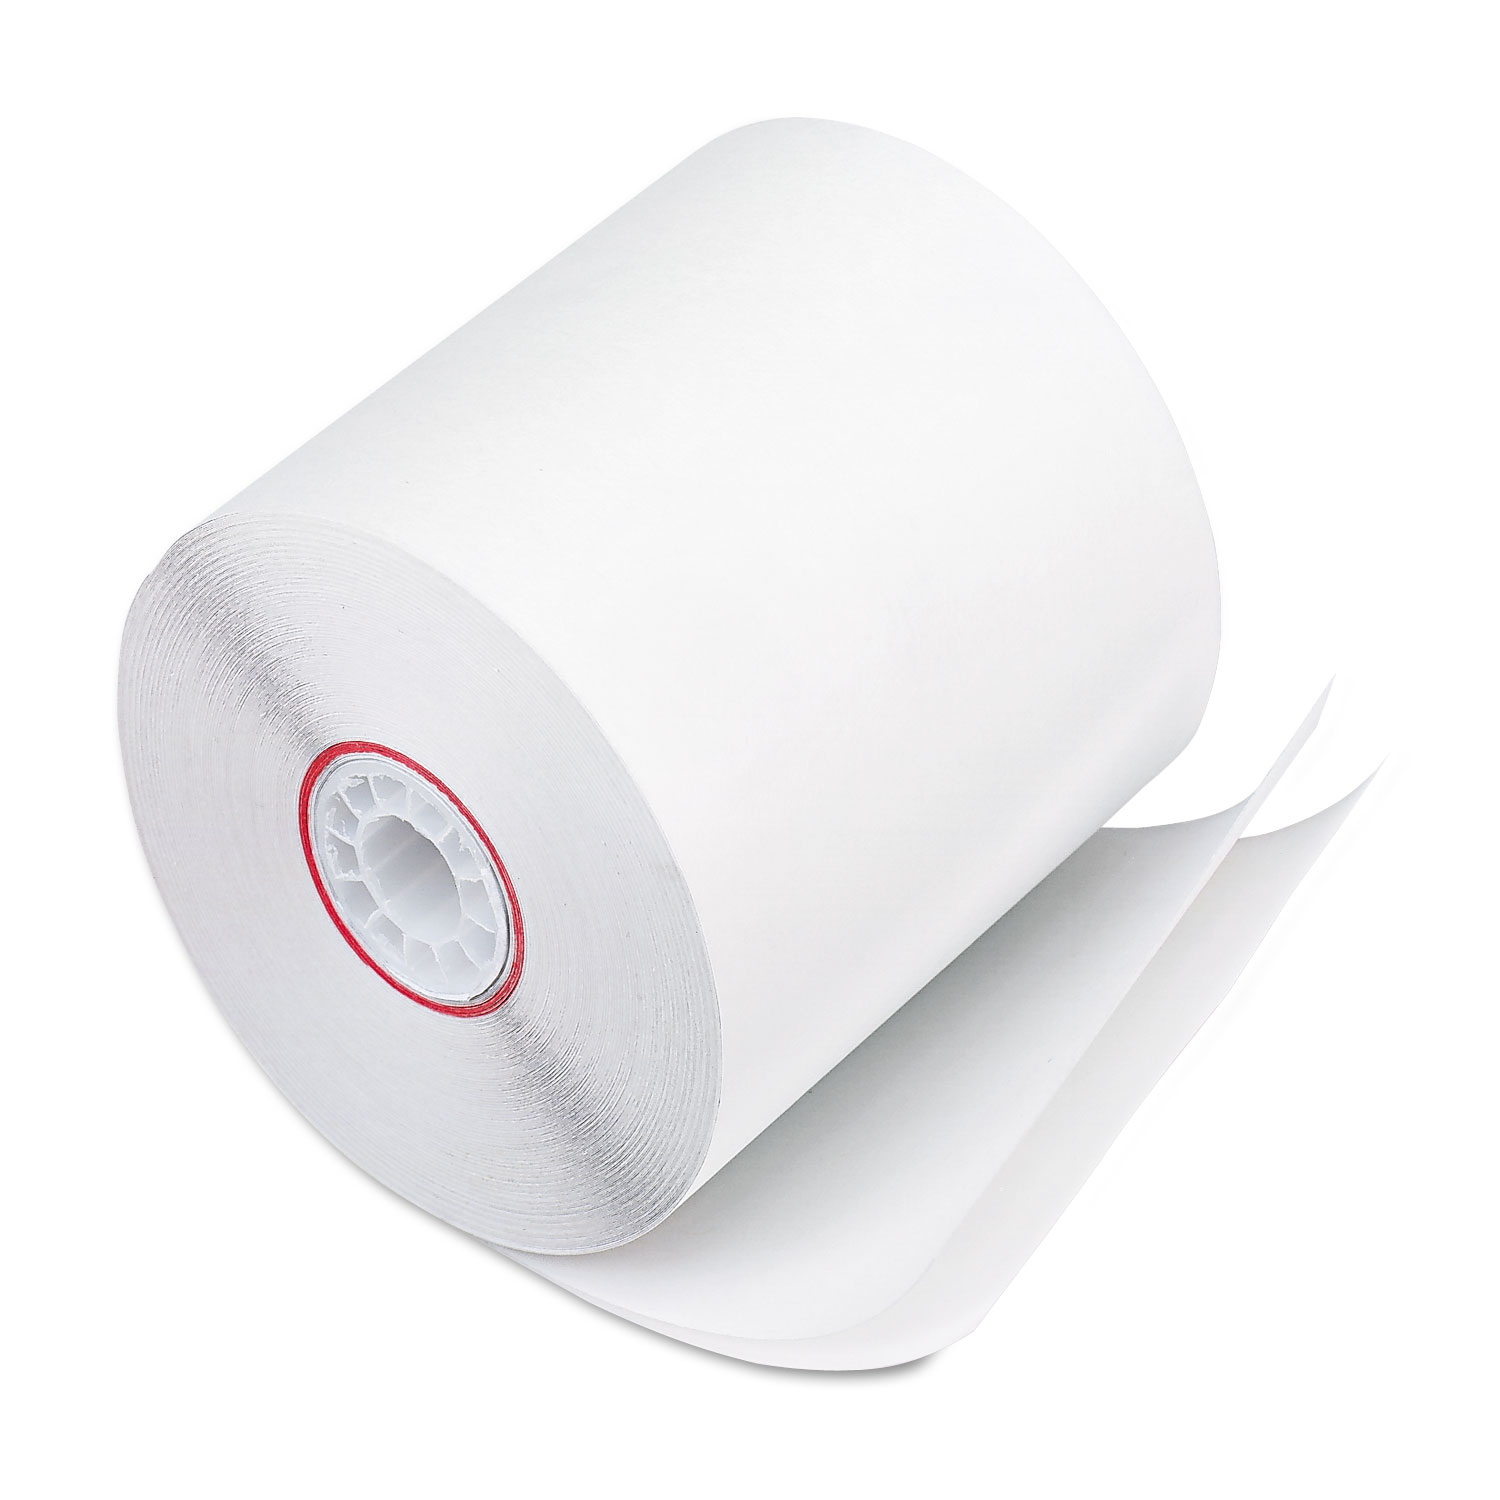  Iconex 7832 Impact Printing Carbonless Paper Rolls, 3 x 90 ft, White/White, 50/Carton (ICX90770443) 